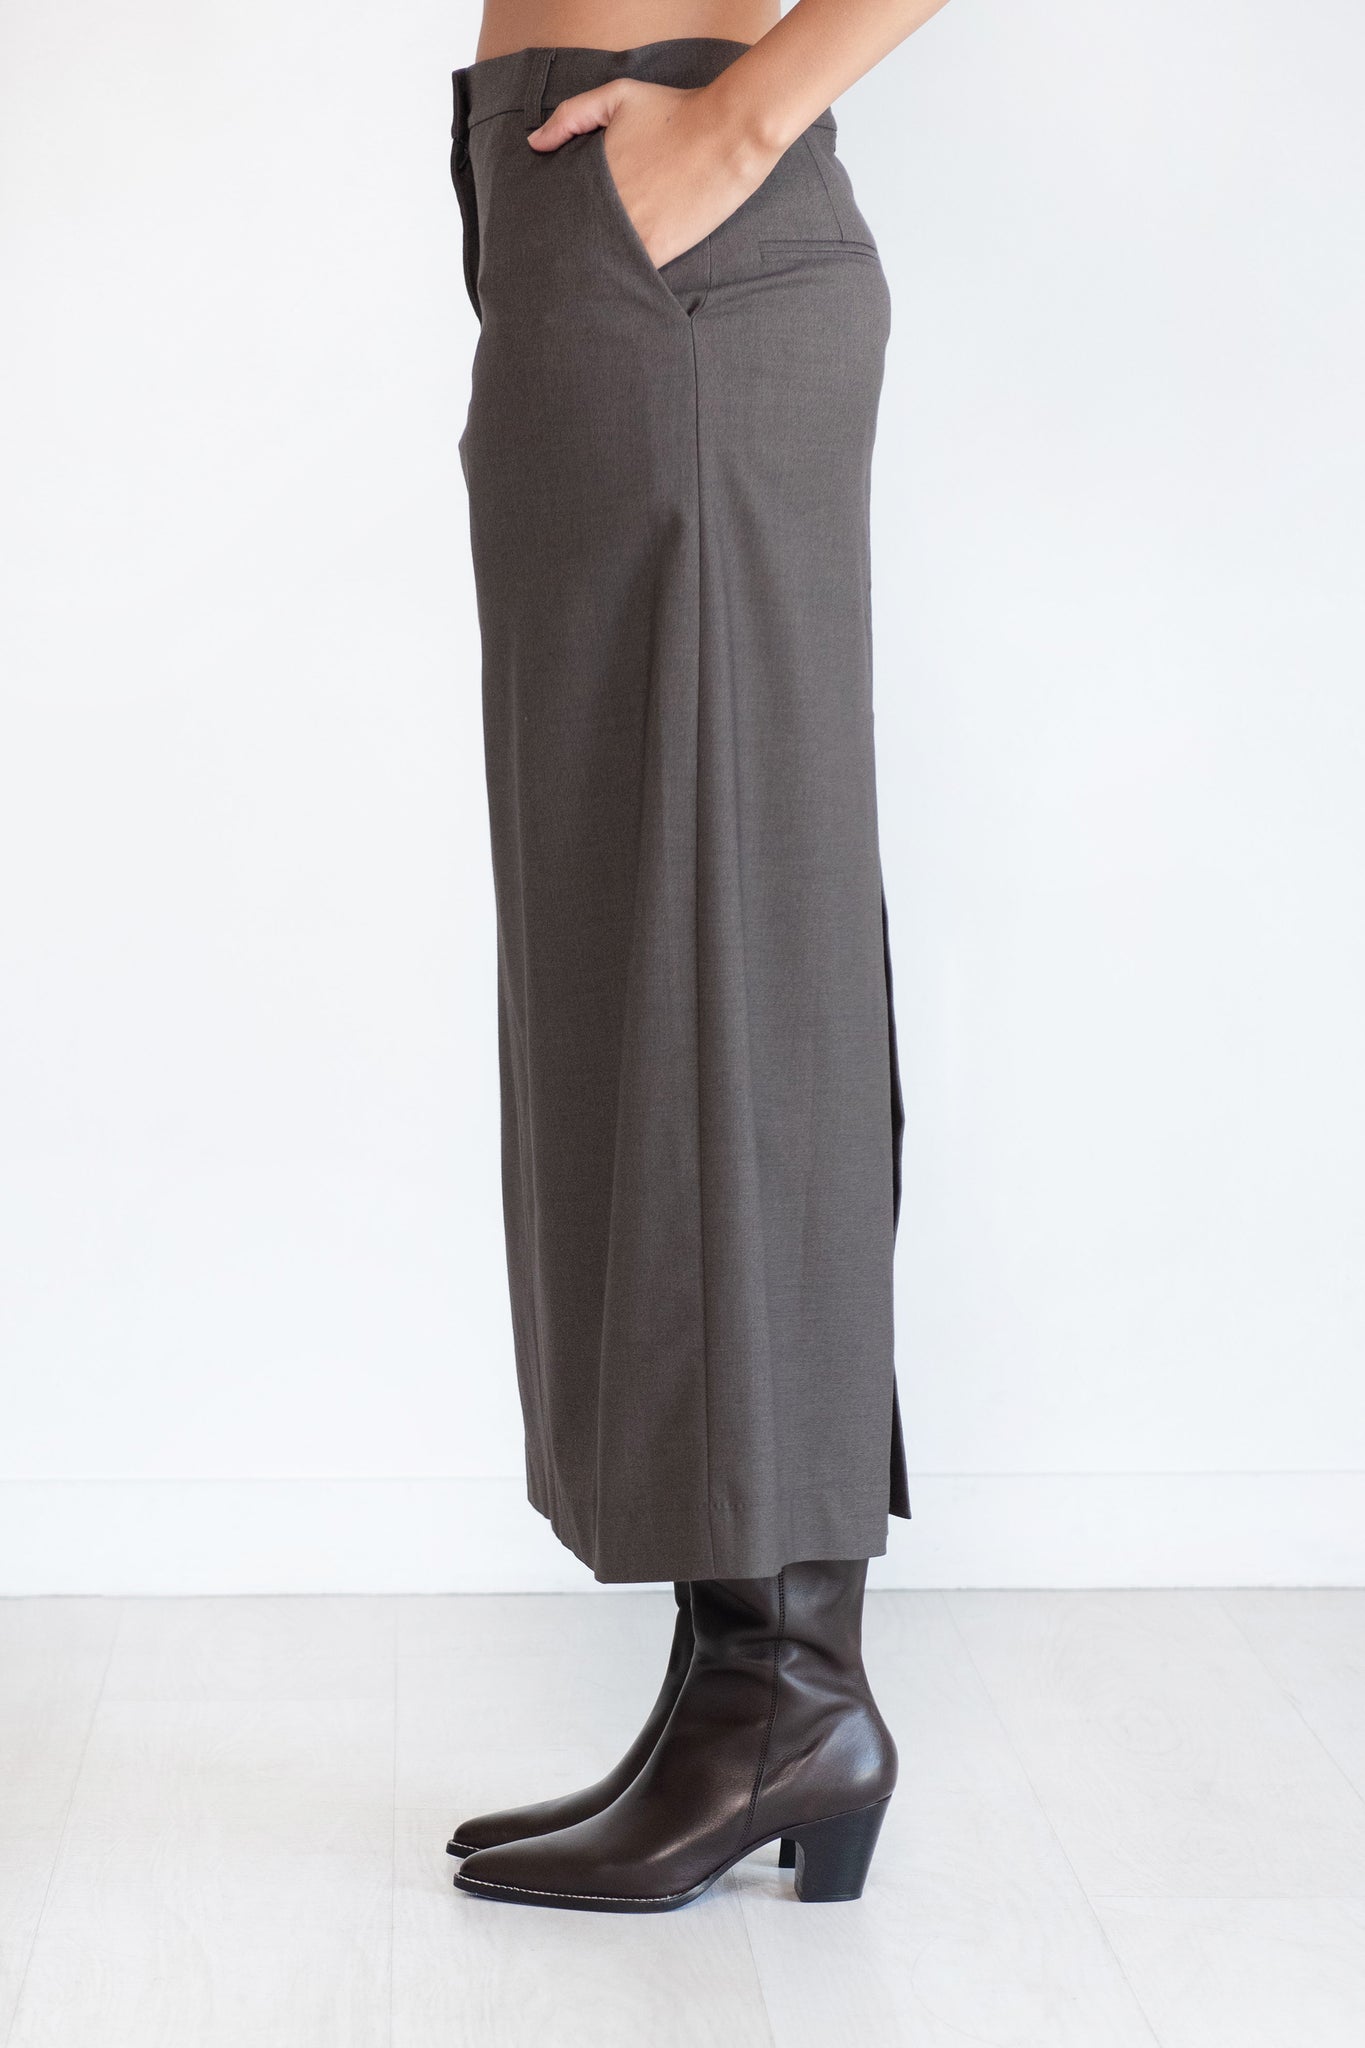 MIJEONG PARK - Wool Blend Midi Skirt, Heather Brown